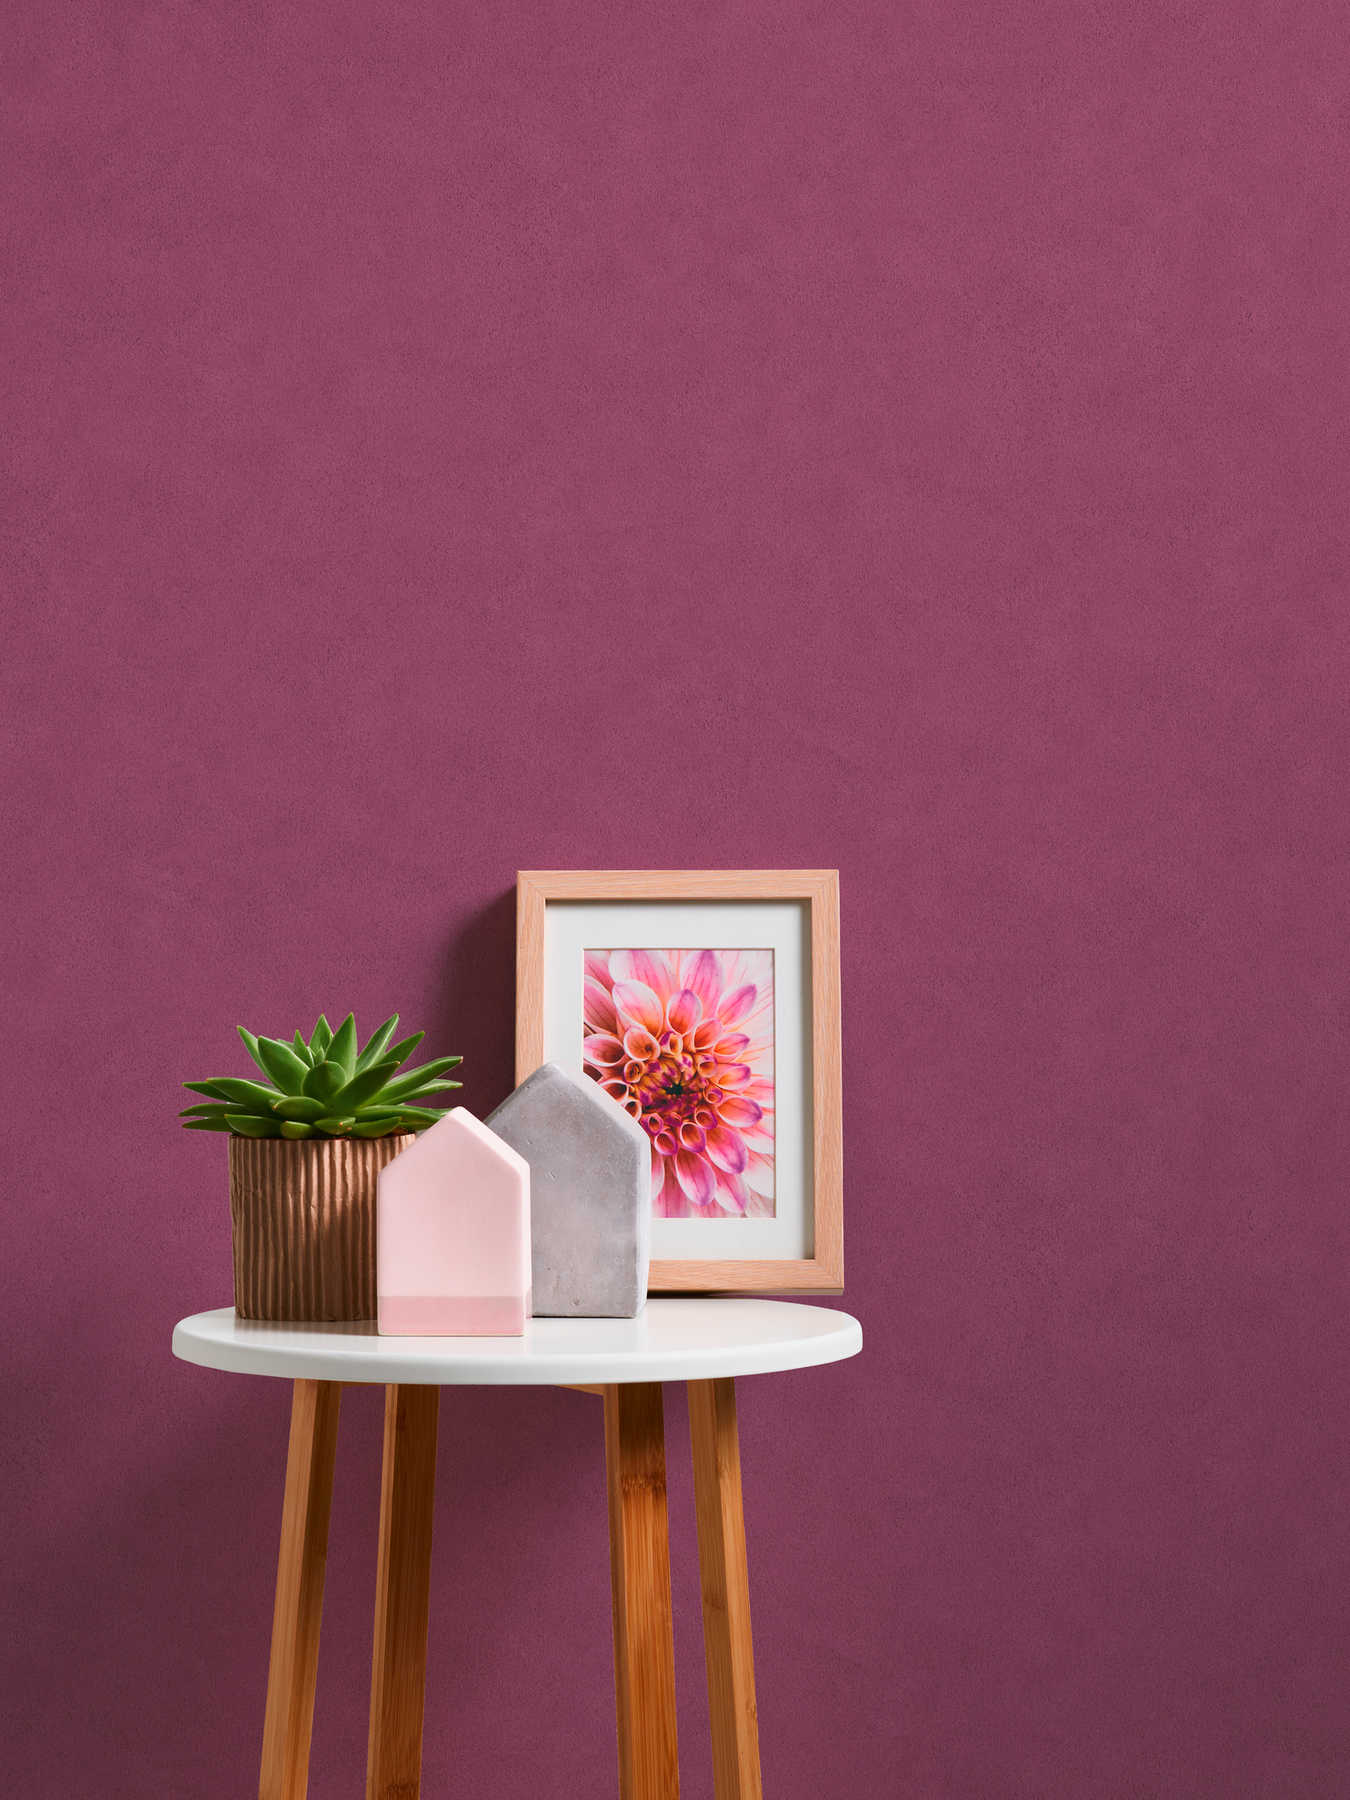             Plain wallpaper with fine mottled surface texture - purple
        